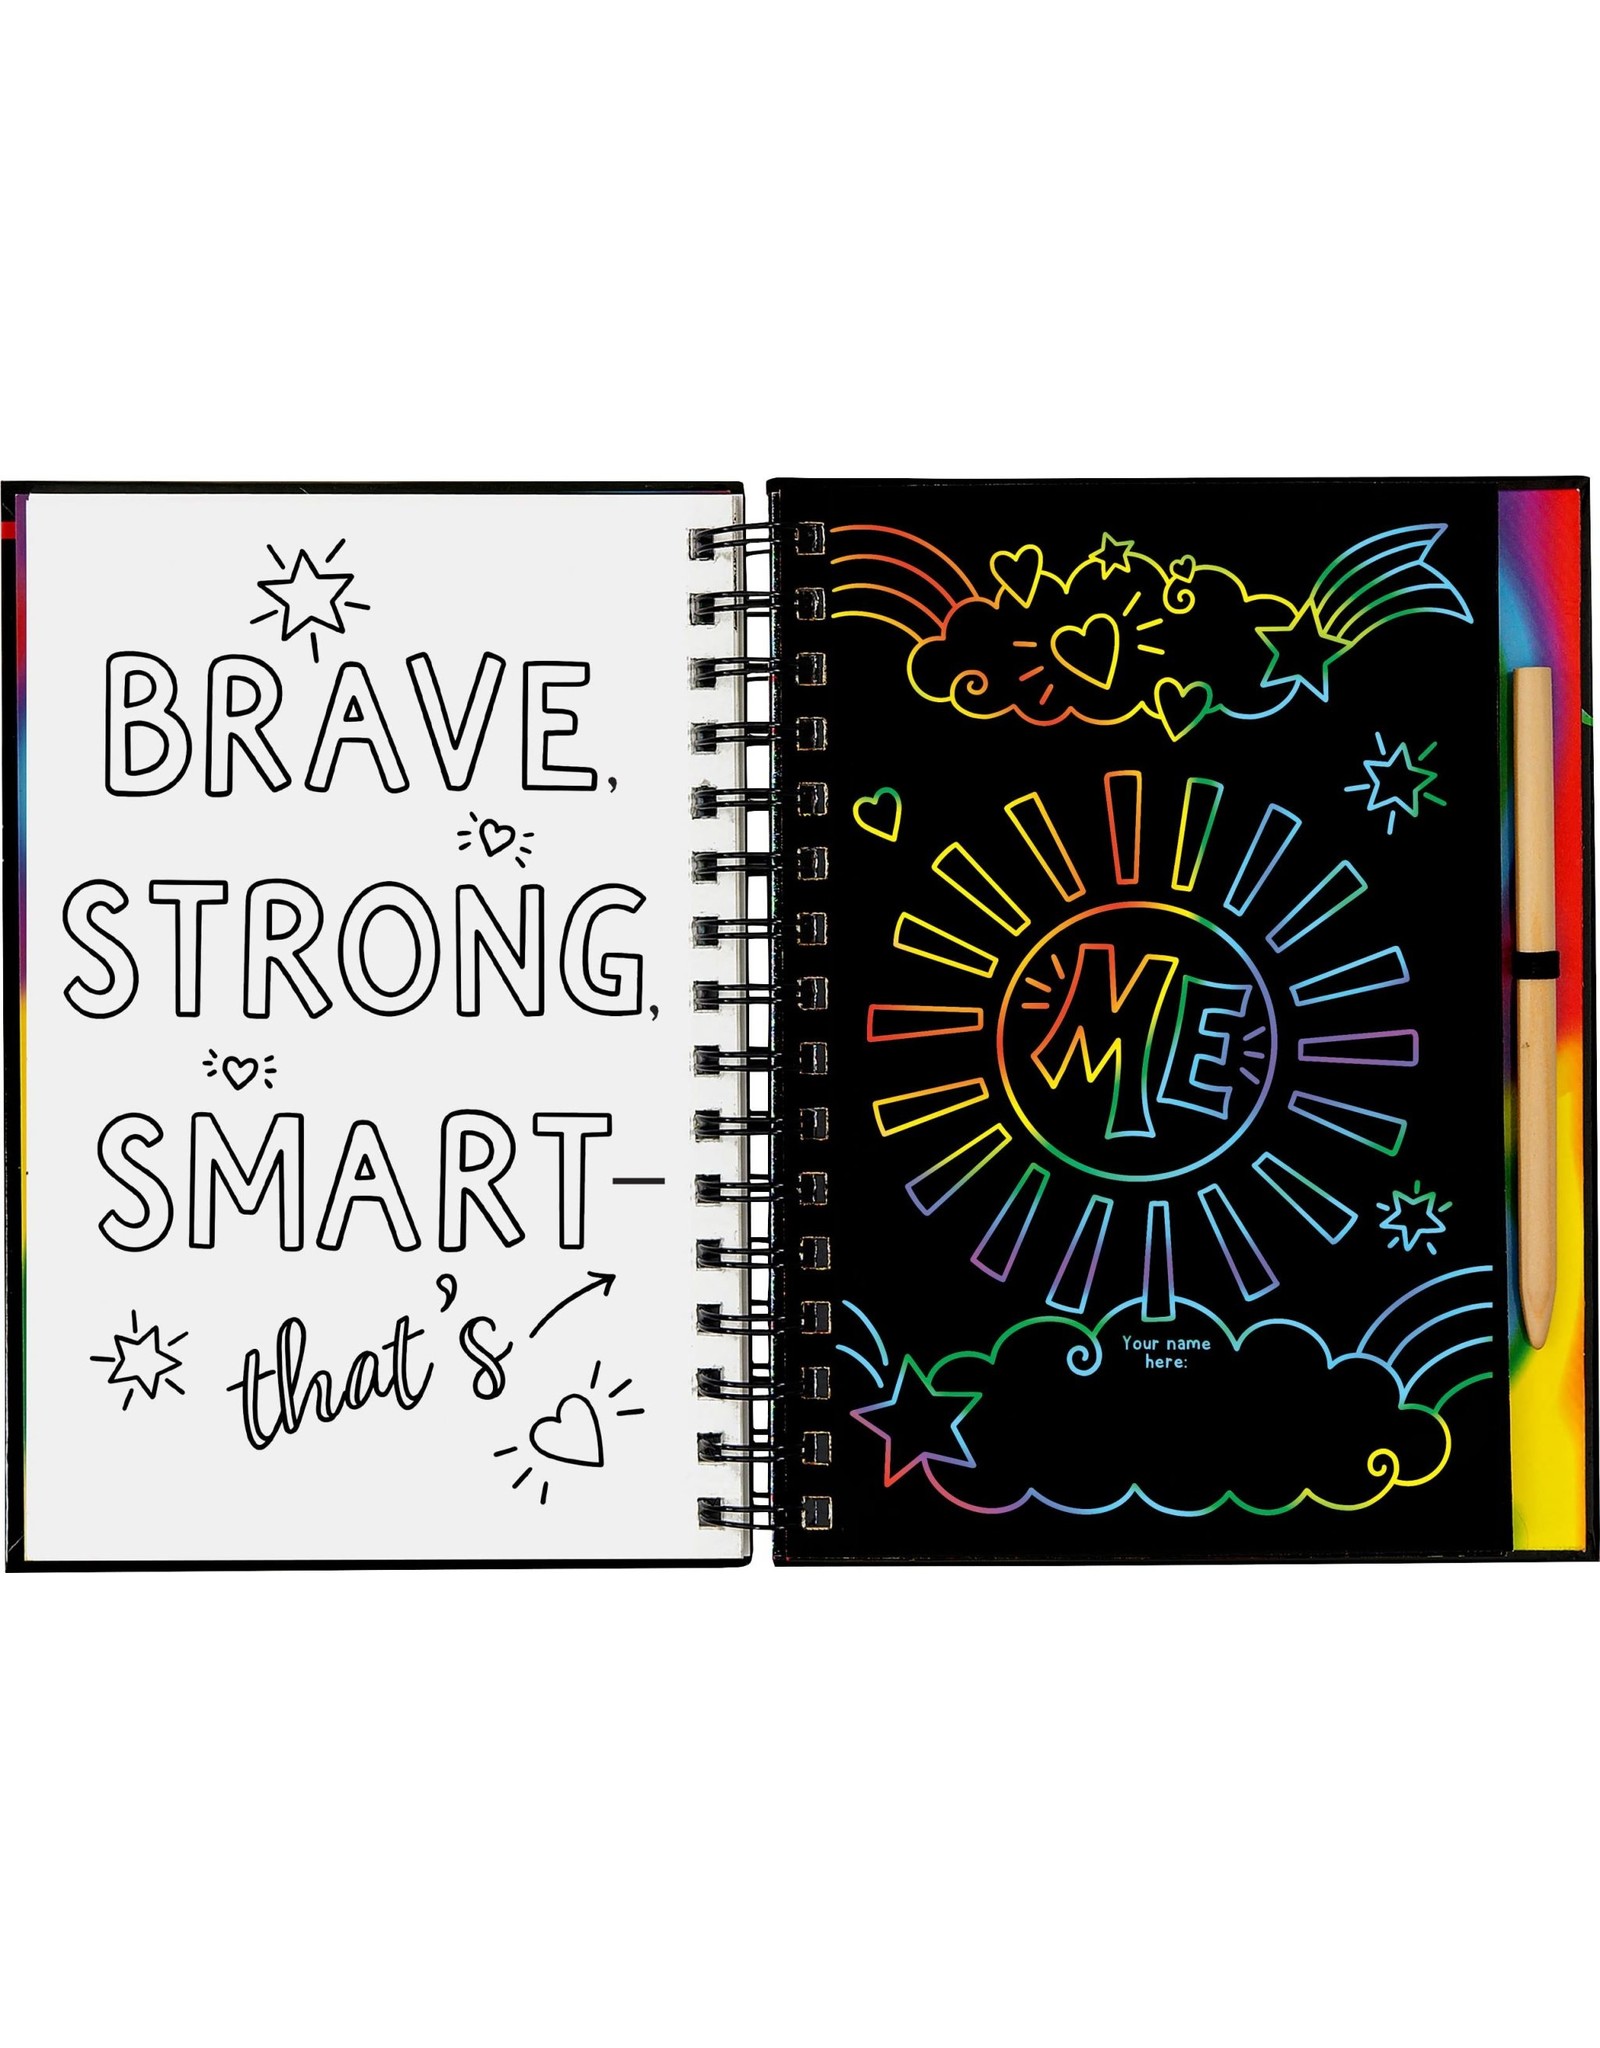 Scratch & Sketch Brave, Strong, Smart